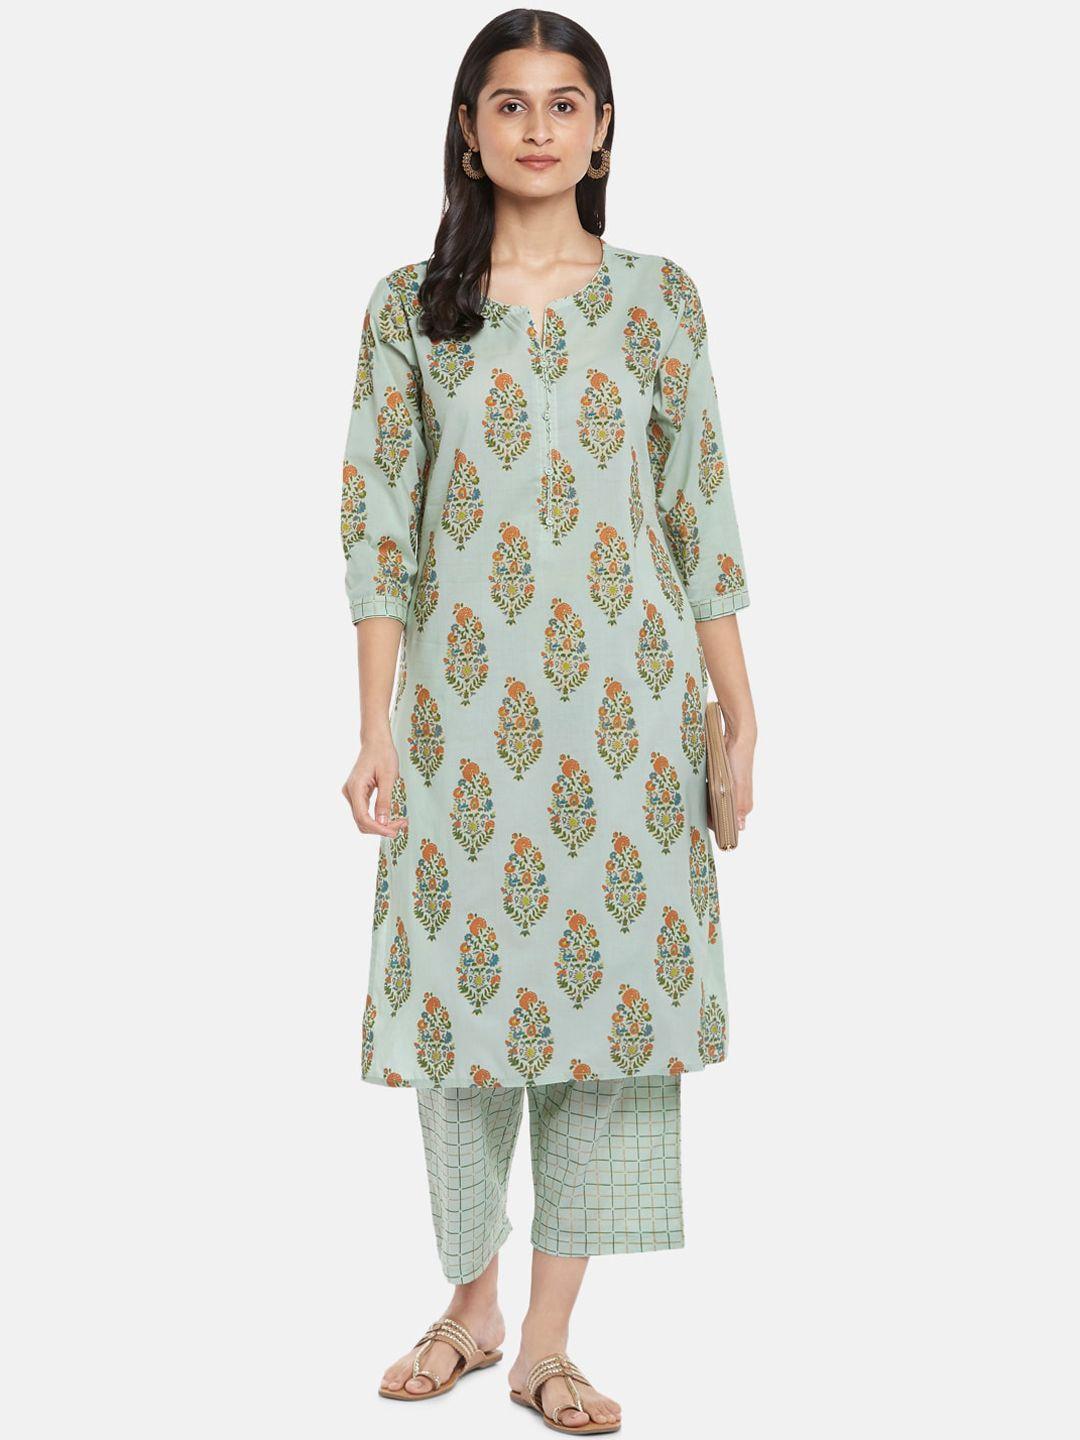 rangmanch-by-pantaloons-women-sea-green-ethnic-motifs-printed-pure-cotton-kurta-set